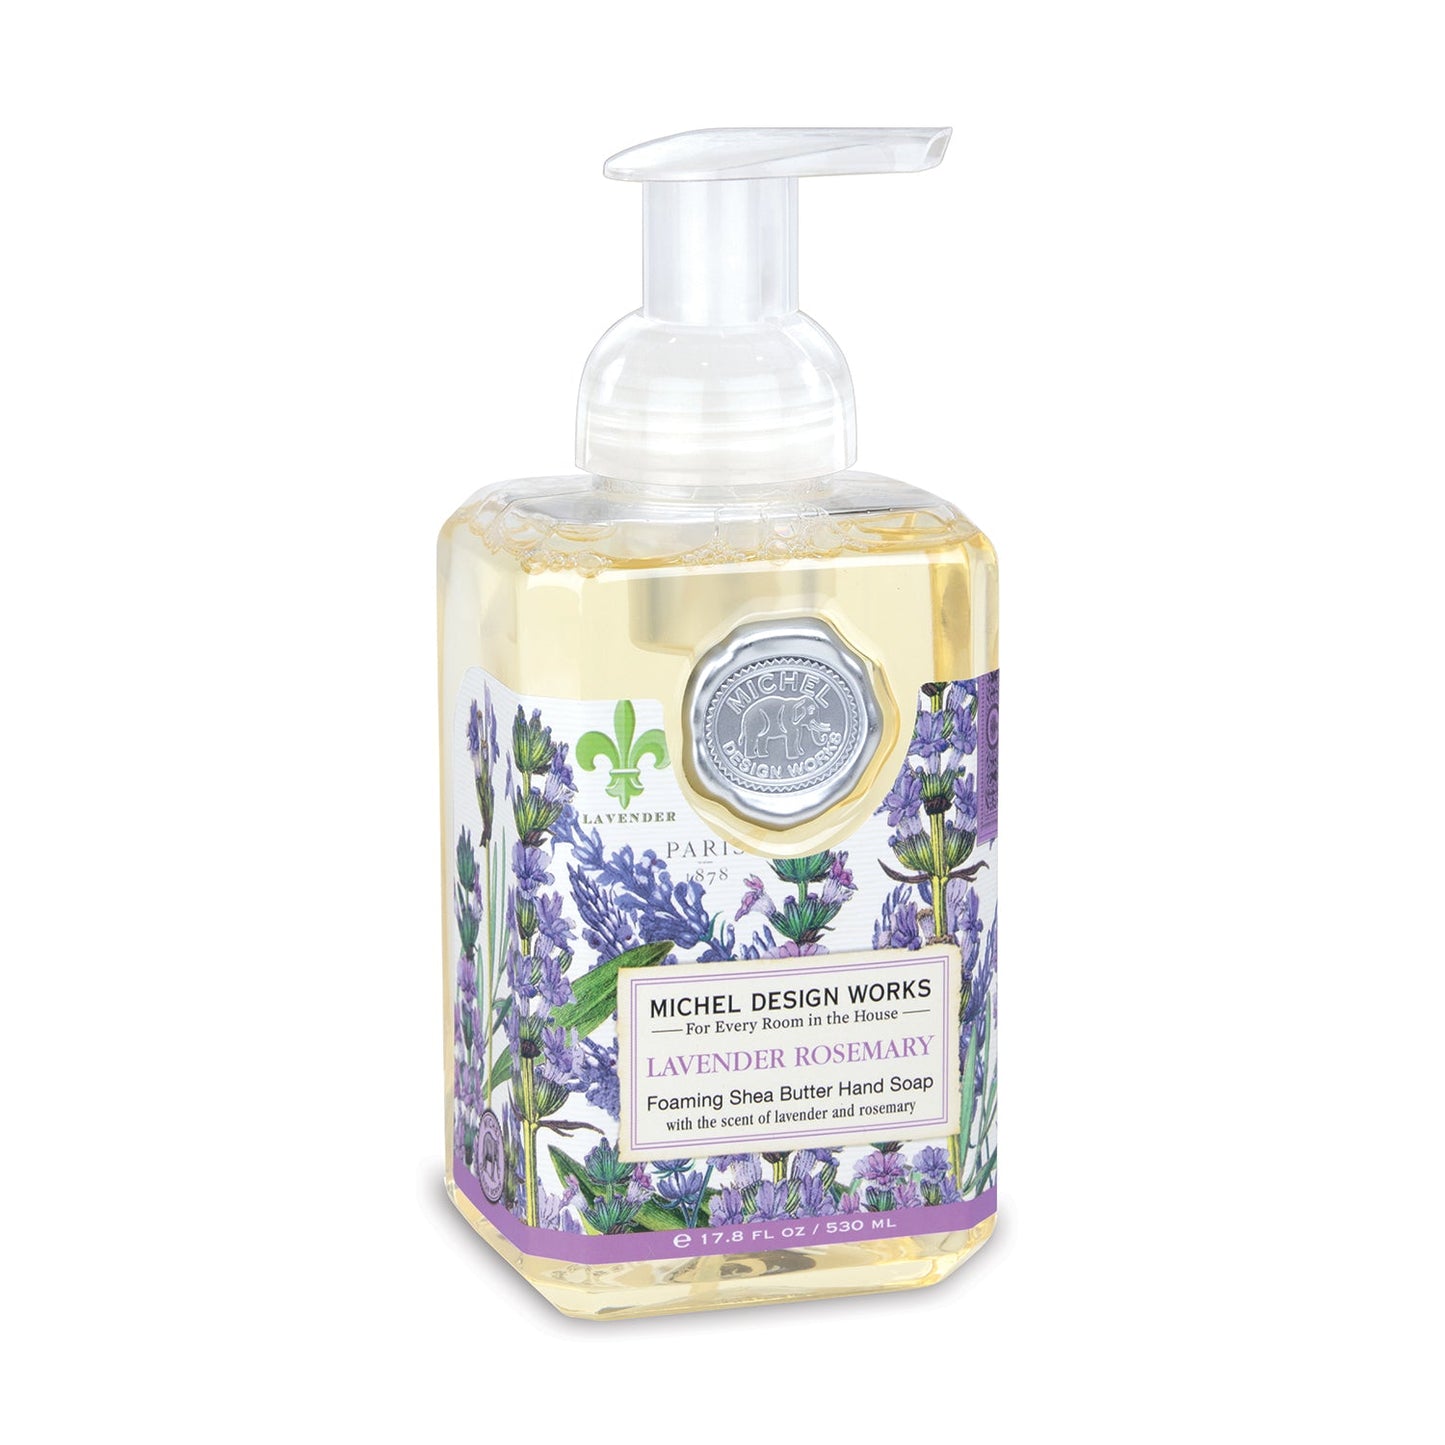 Hand Soap Lavender Rosemary, Foaming